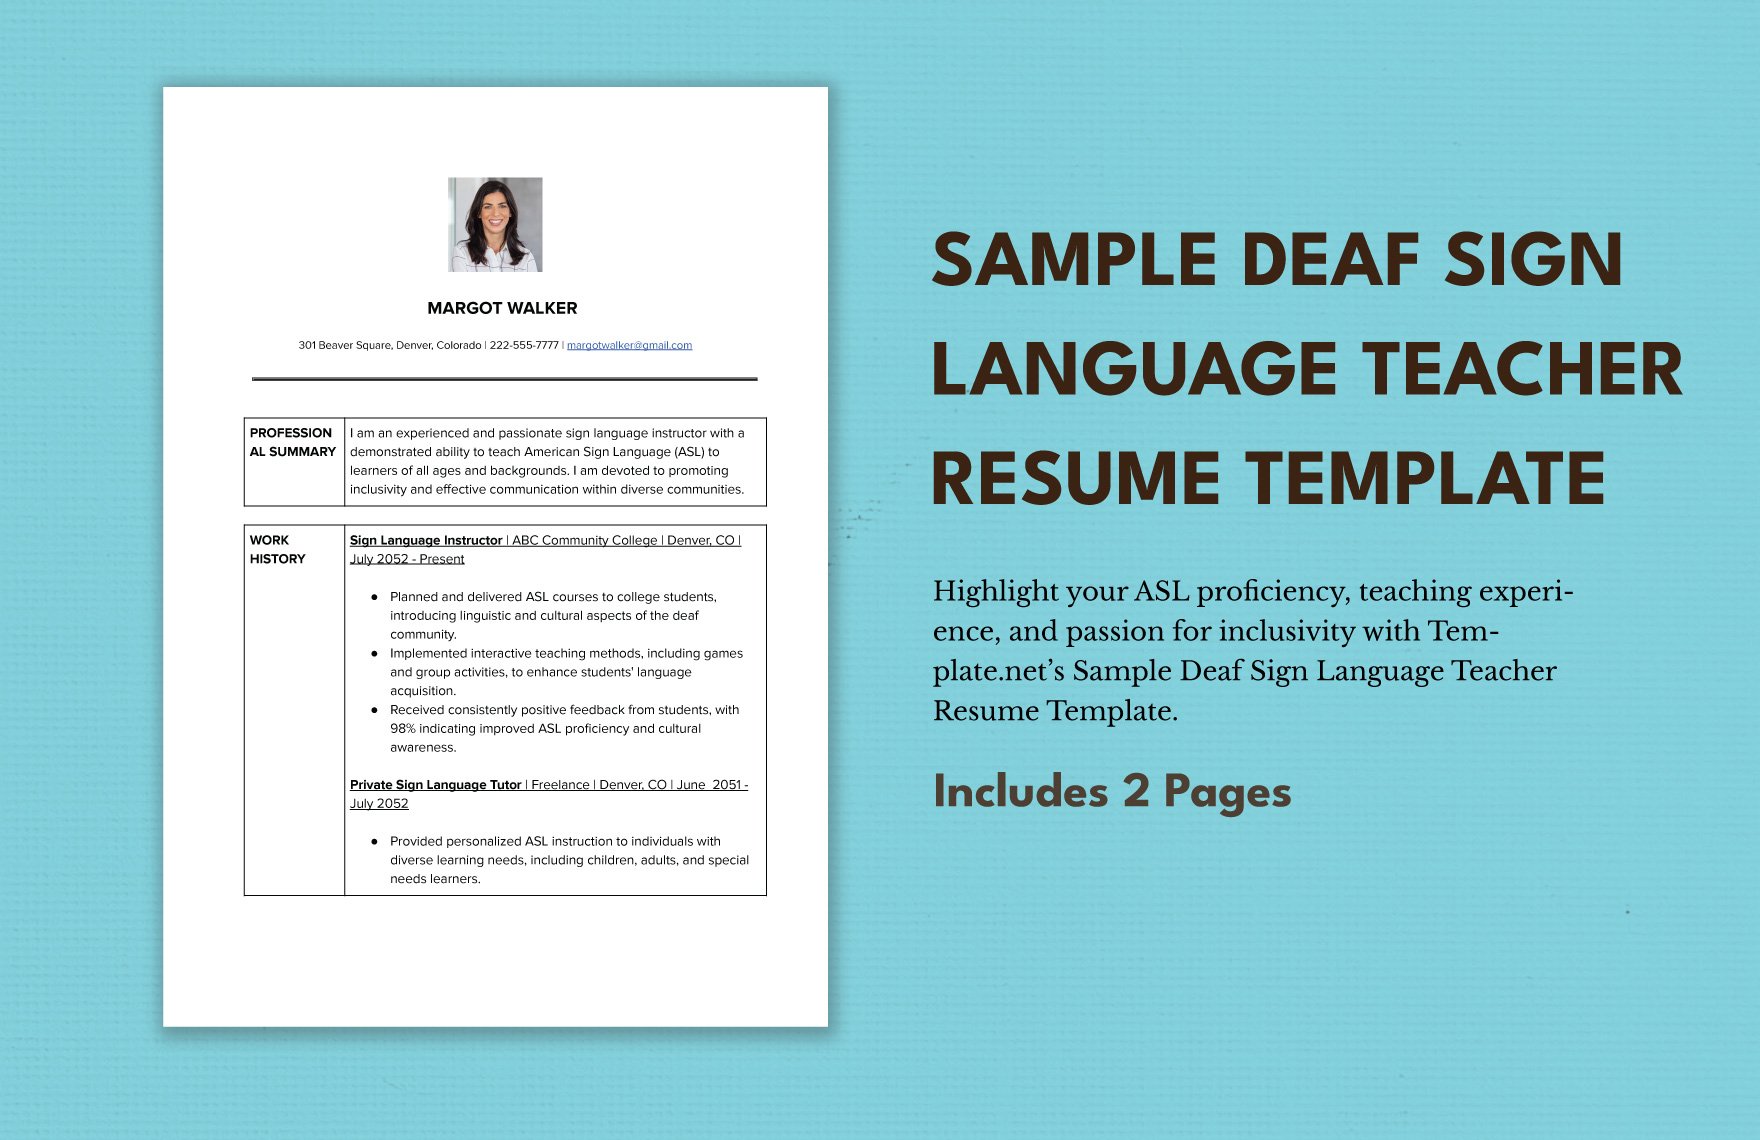 Sample Deaf Sign Language Teacher Resume Template